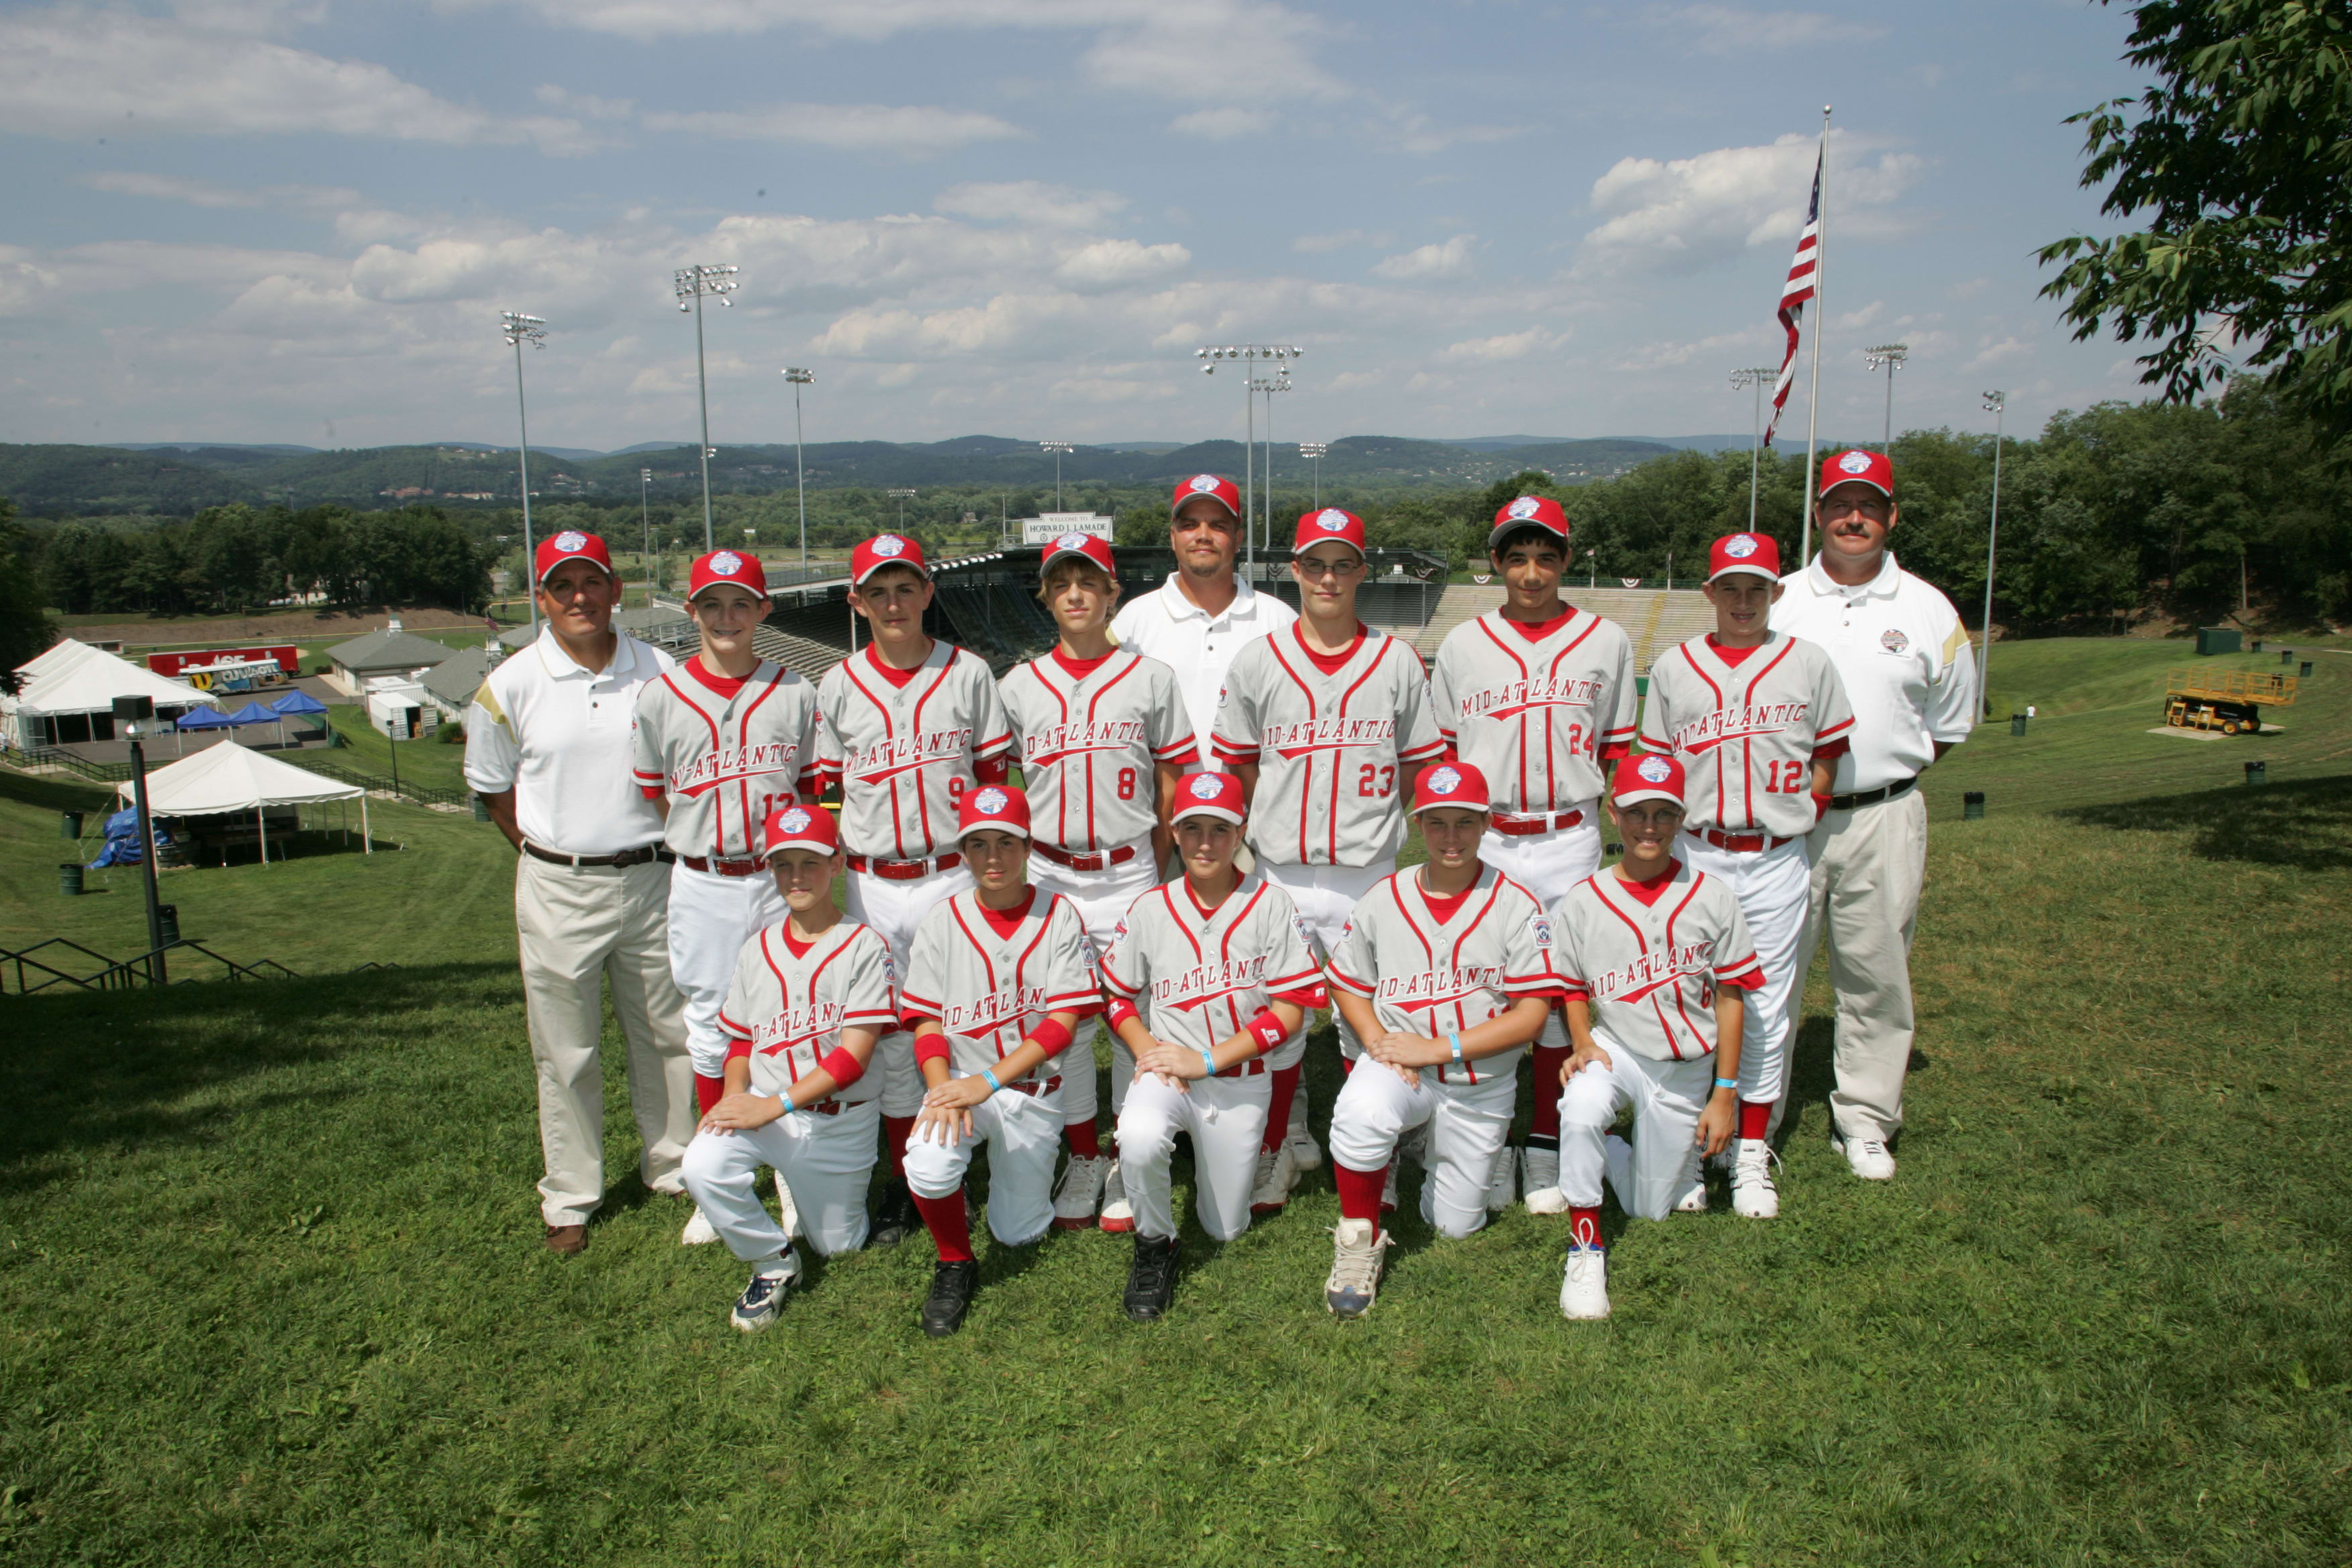 2005 Mid-Atlantic Team Photo